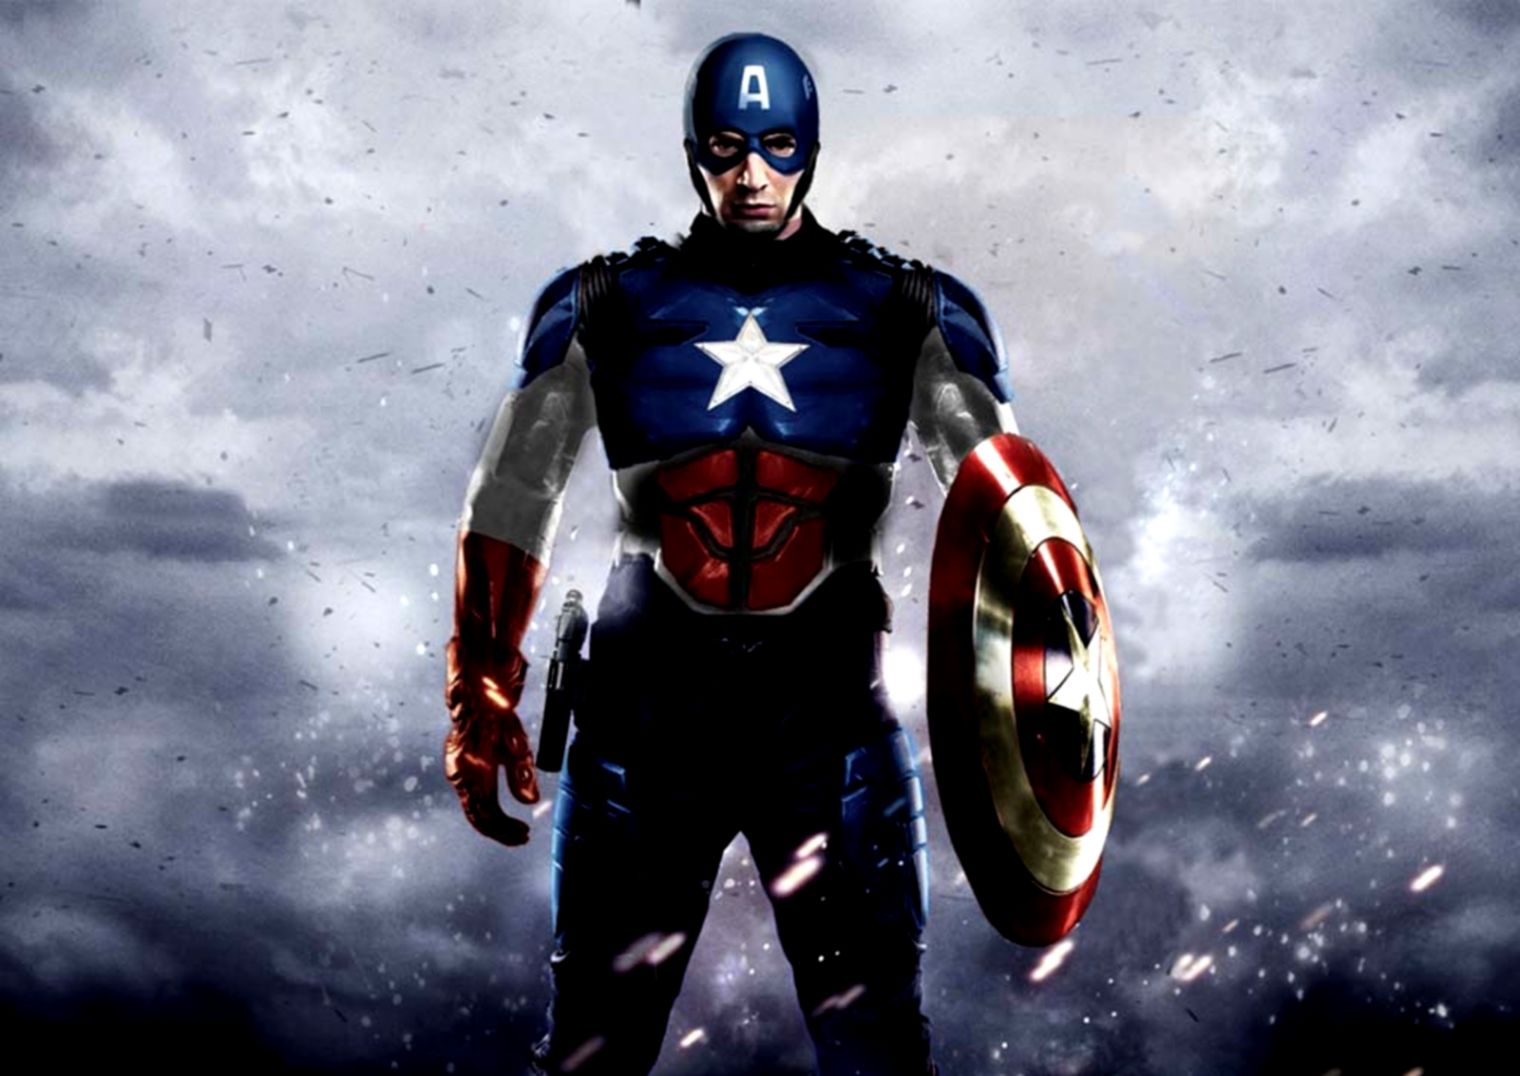 capitan america 바탕 화면,슈퍼 히어로,소설 속의 인물,캡틴 아메리카,영웅,액션 피규어